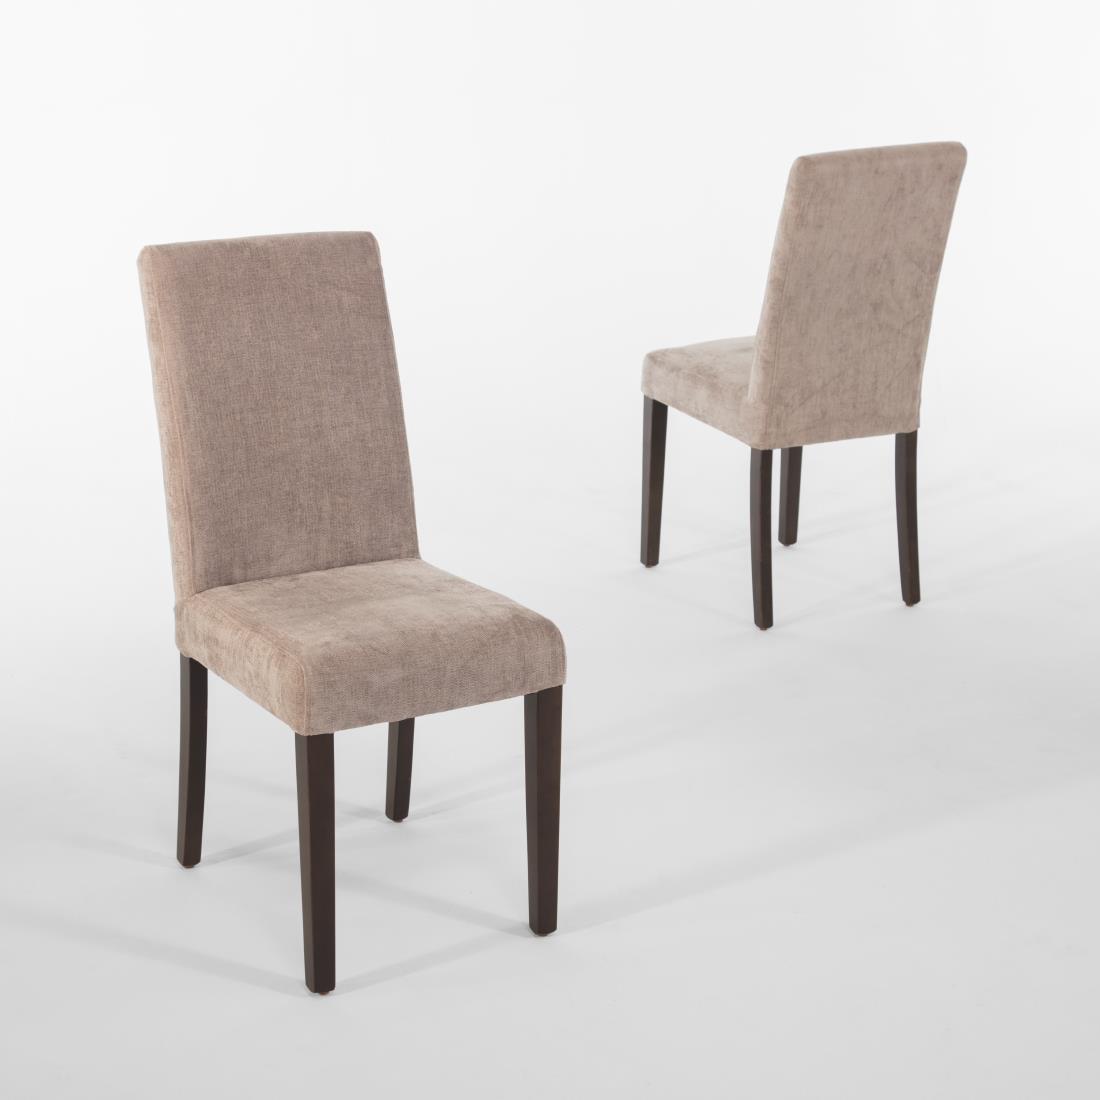 Bolero Dining Chairs Beige (Pack of 2) - GK999  - 6